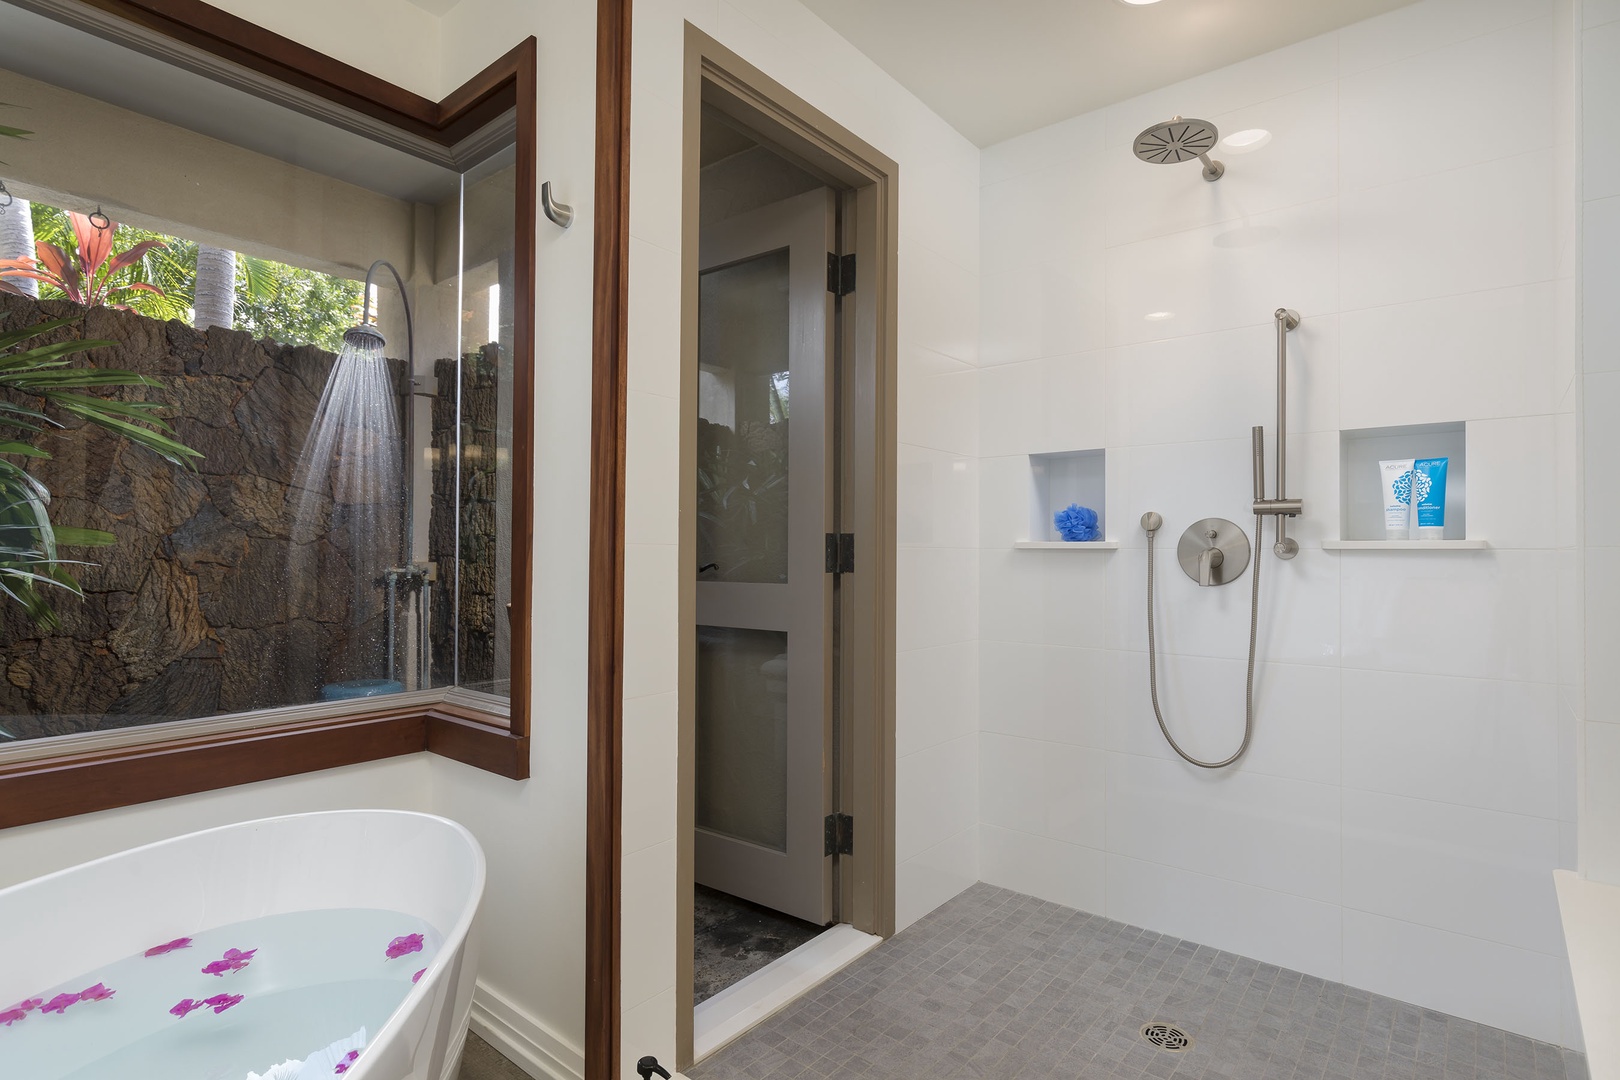 Kailua Kona Vacation Rentals, Hillside Villa 7101 - Walk In Shower with Access to Outdoor Shower